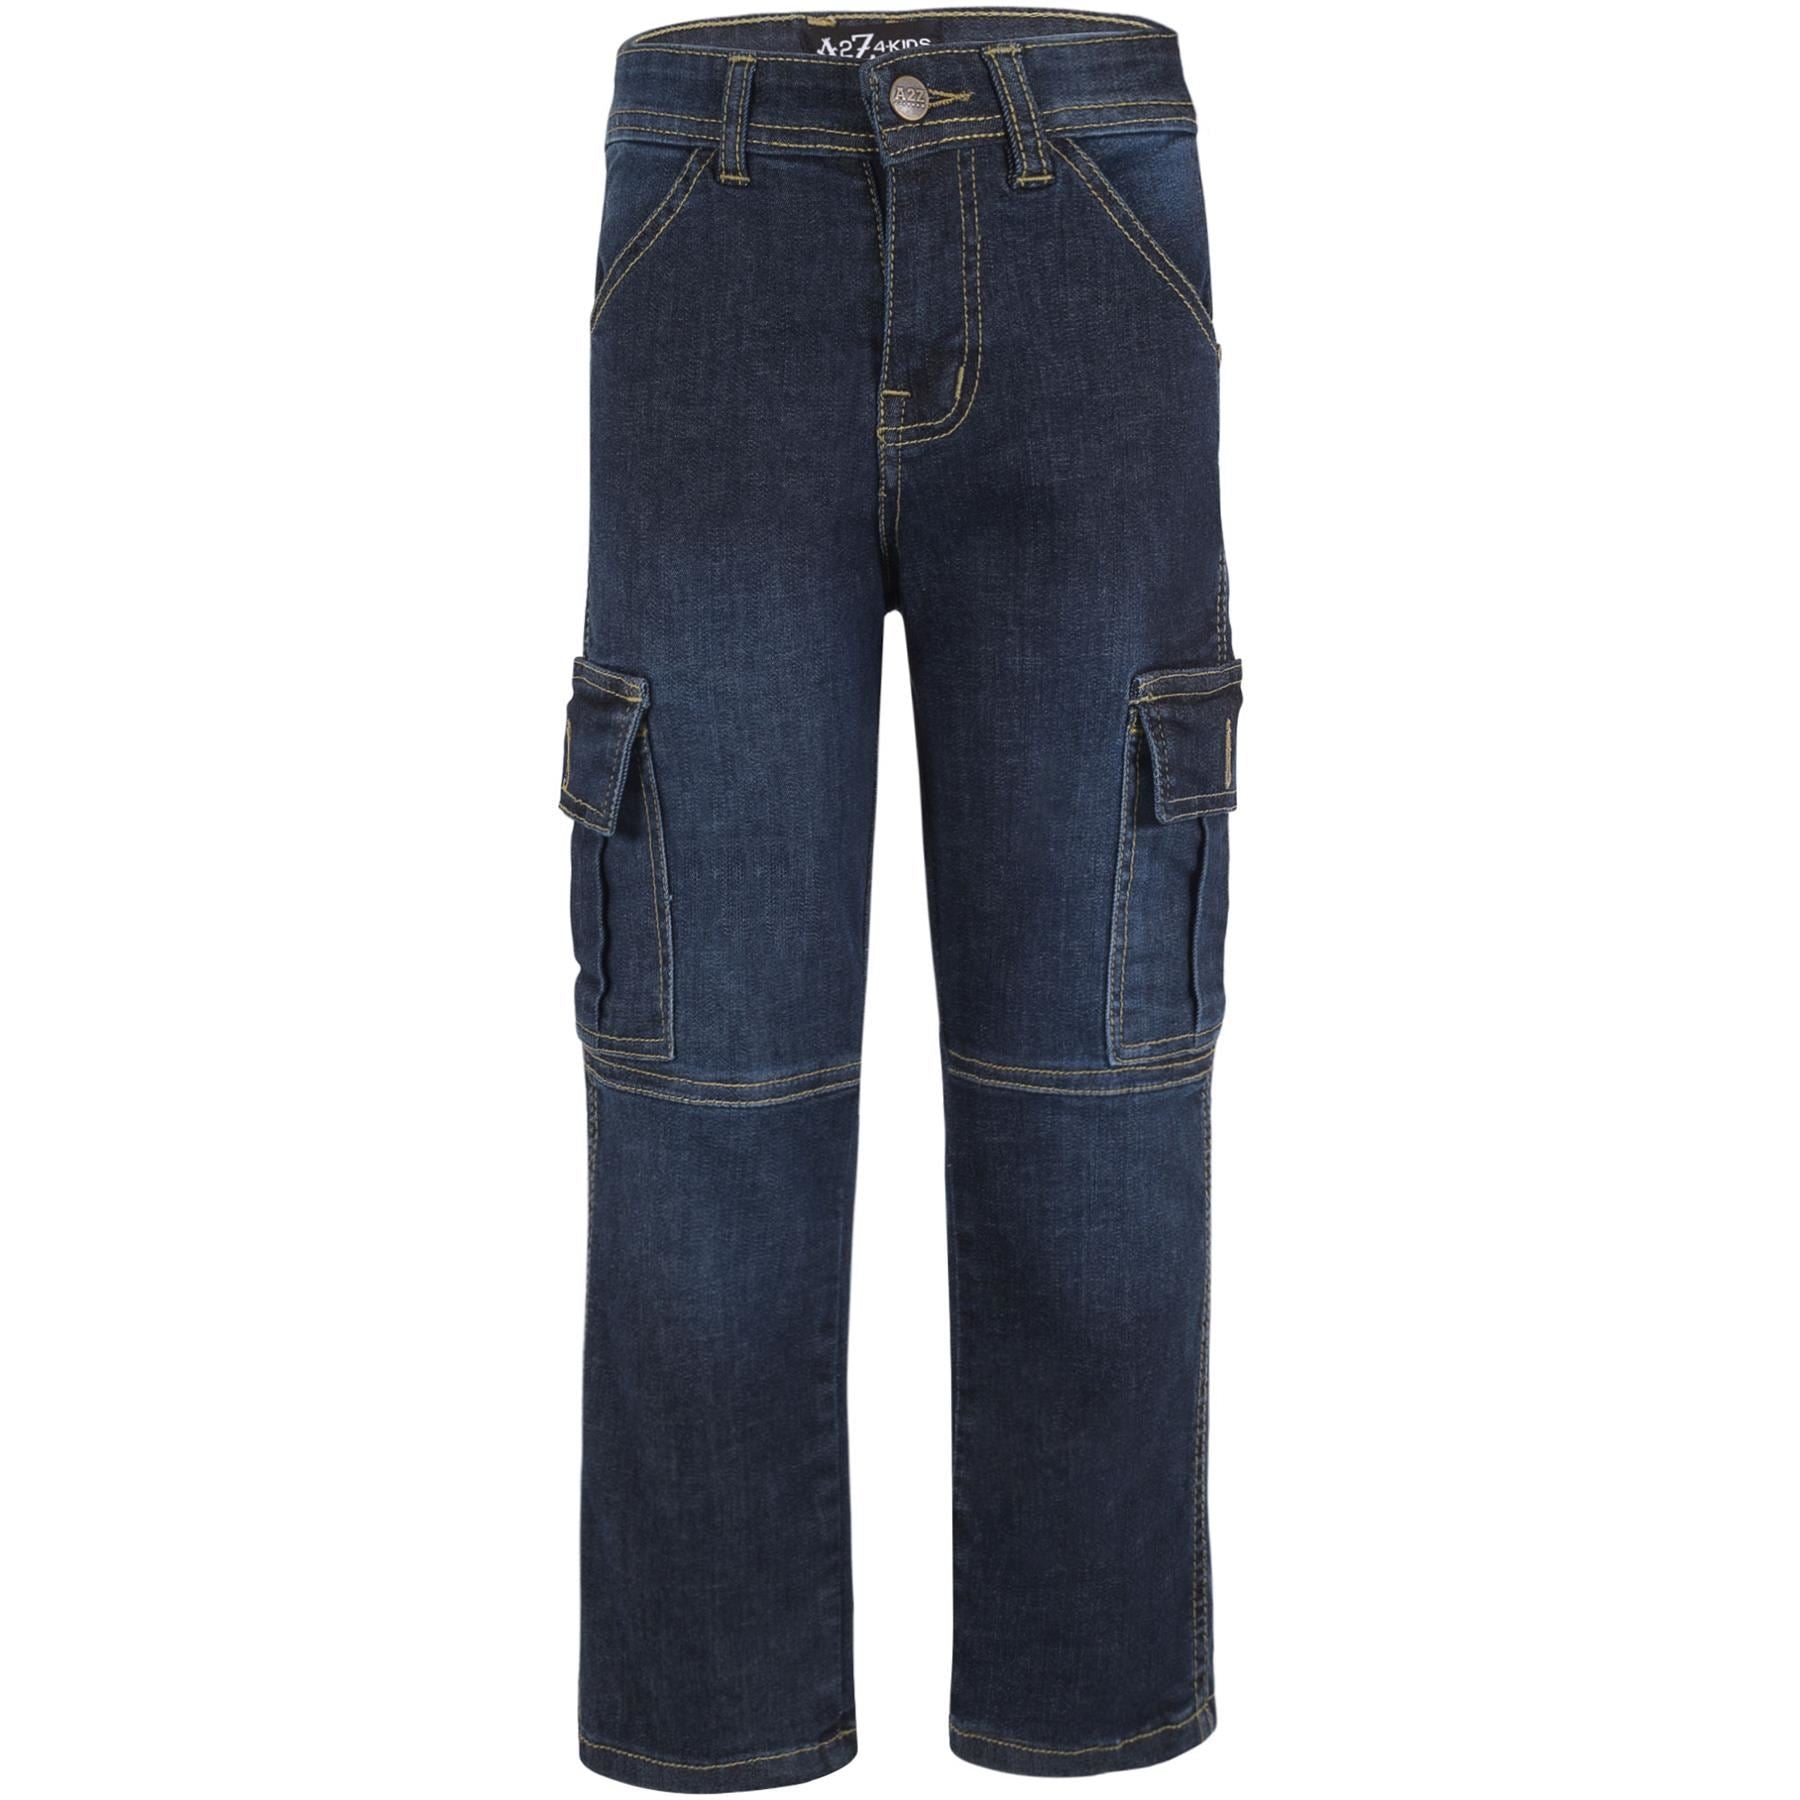 Stylish 6 Pocket Denim Cargo Jeans For Women & Girls